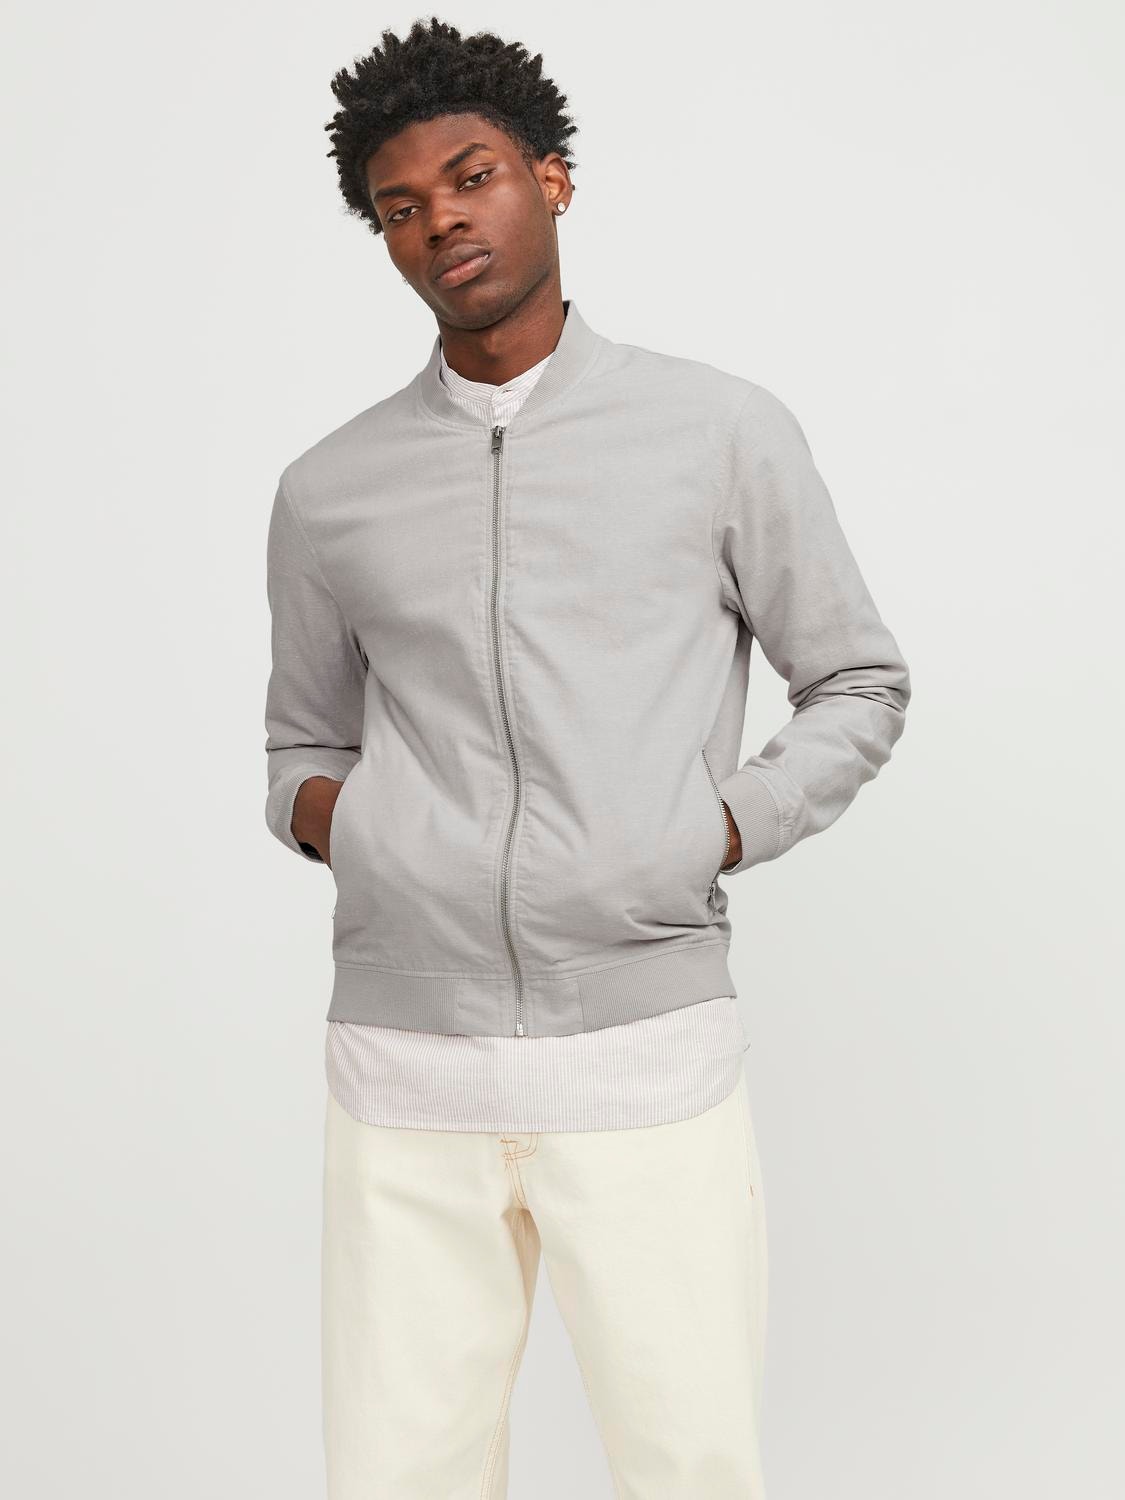 Light Grey Mixed Media Jacket - Benjamin's Menswear